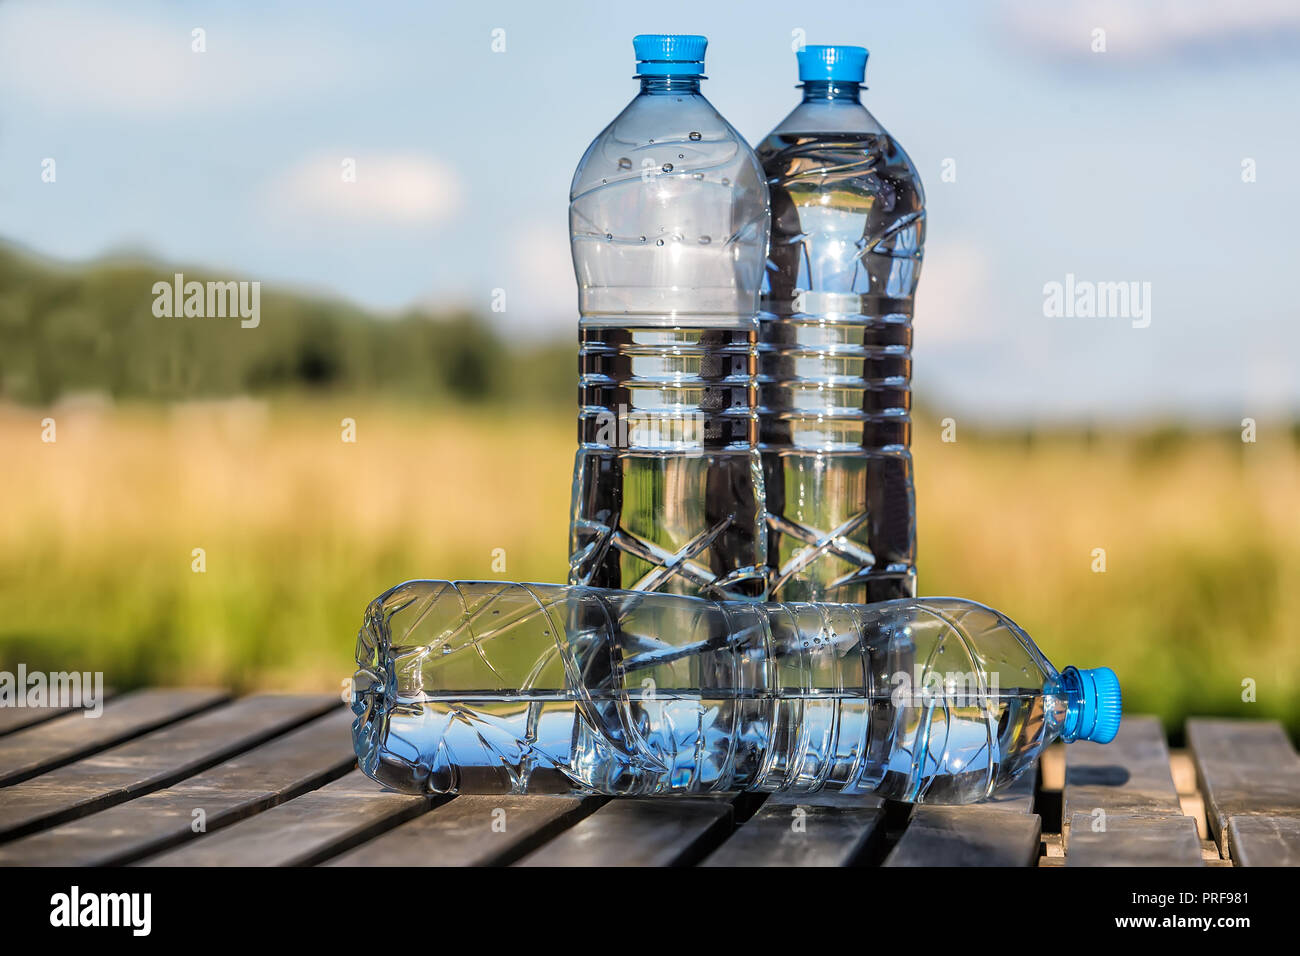 https://c8.alamy.com/comp/PRF981/drinking-water-in-plastic-bottles-outdoors-PRF981.jpg